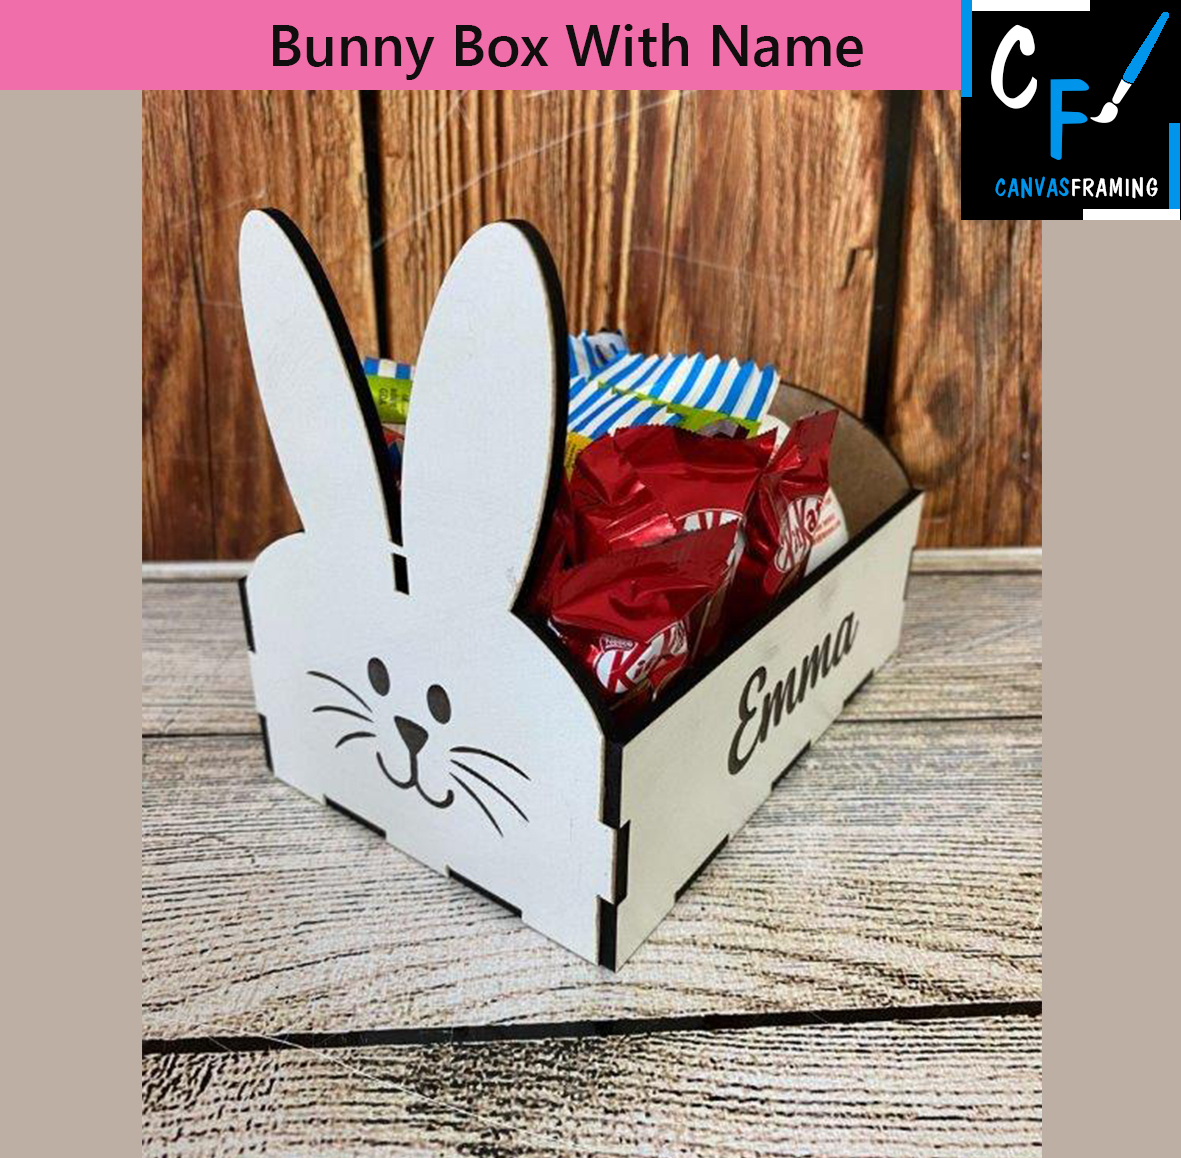 Bunny Box With Name